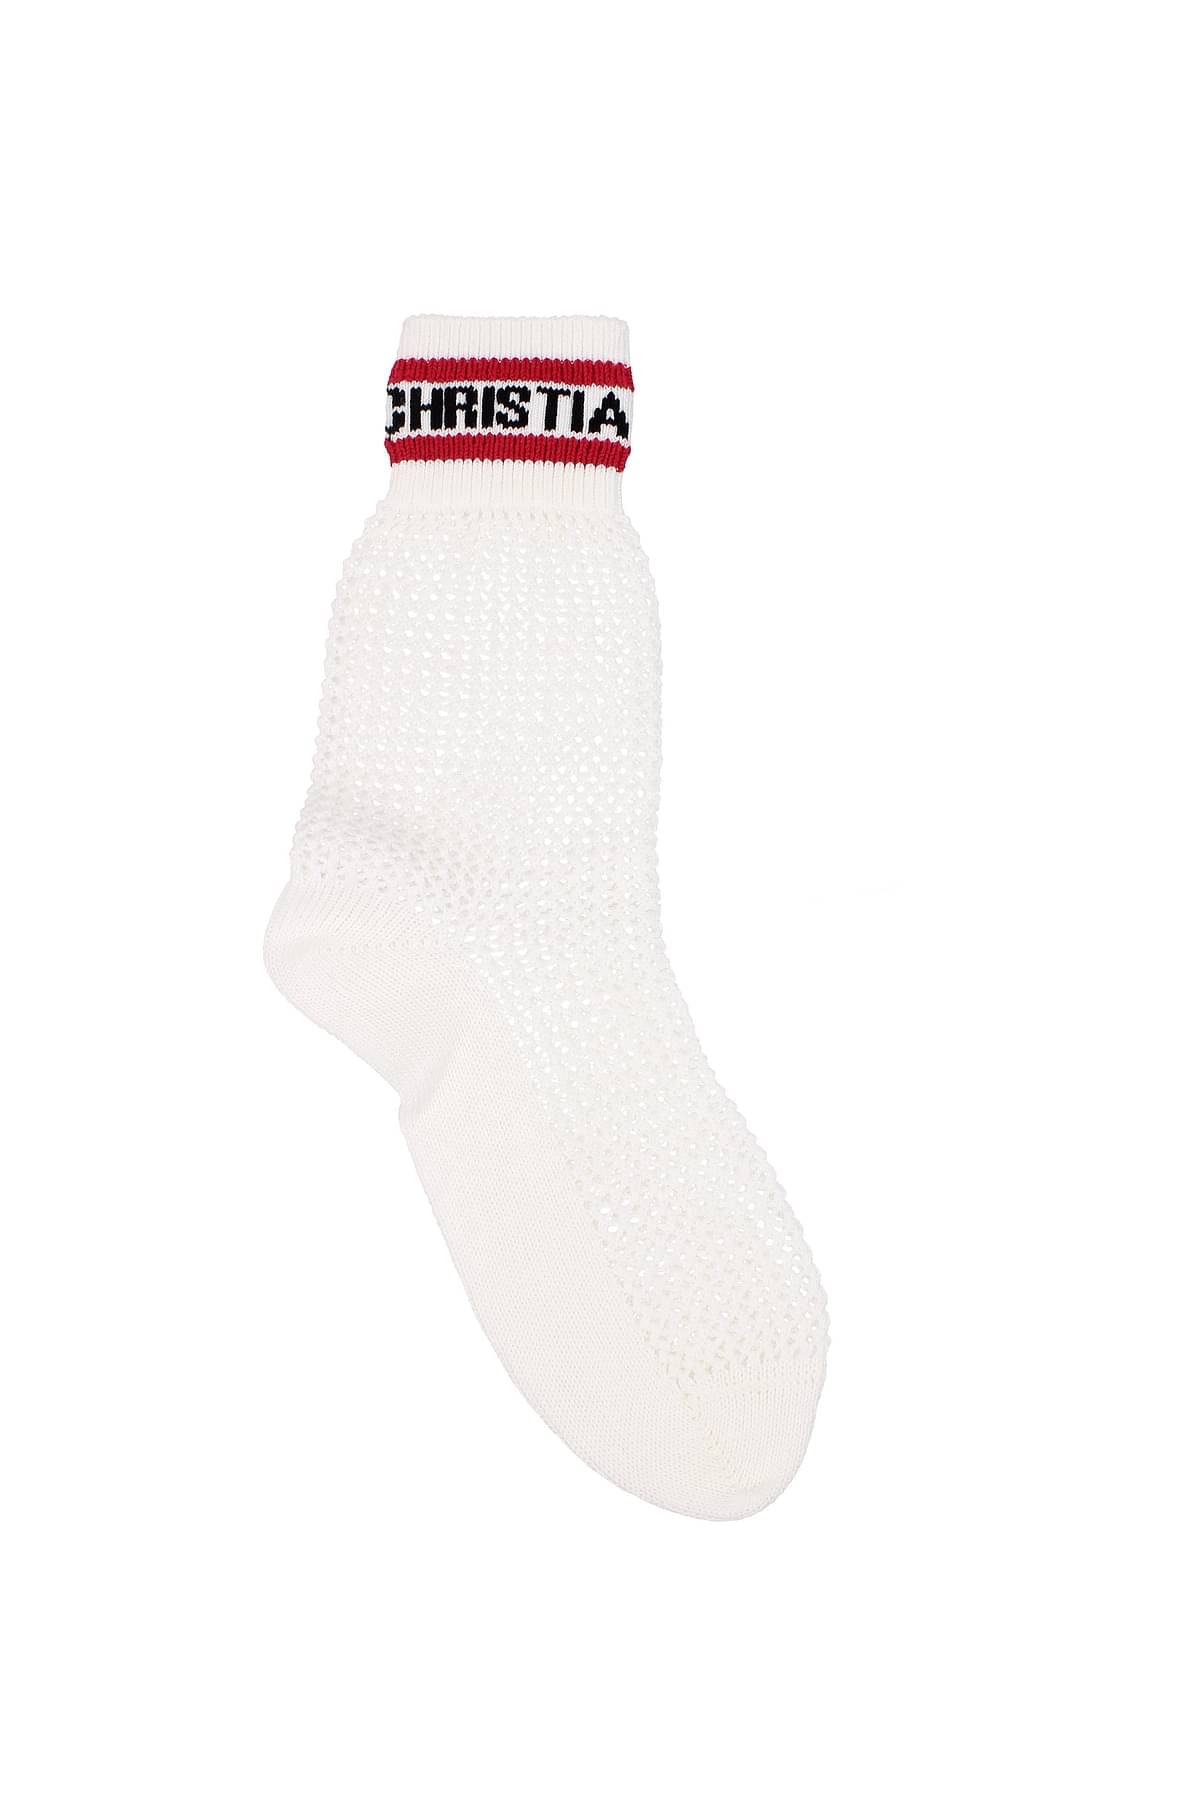 Christian Dior Short socks Women 14SOC503A203402 Cotton White